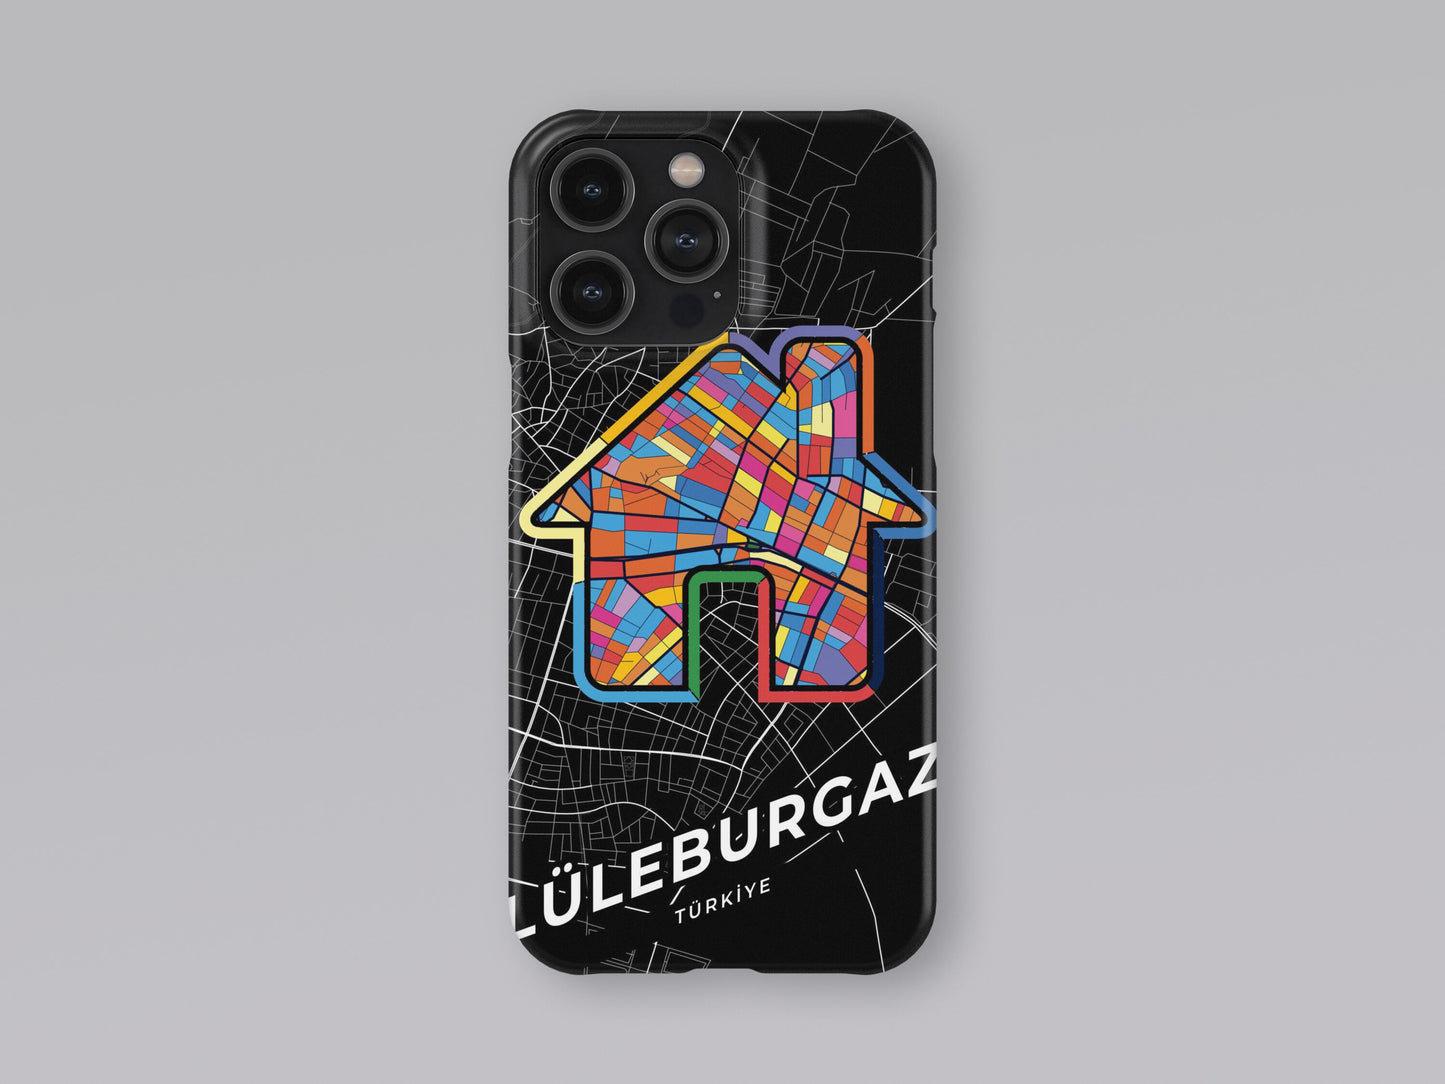 Lüleburgaz Turkey slim phone case with colorful icon. Birthday, wedding or housewarming gift. Couple match cases. 3